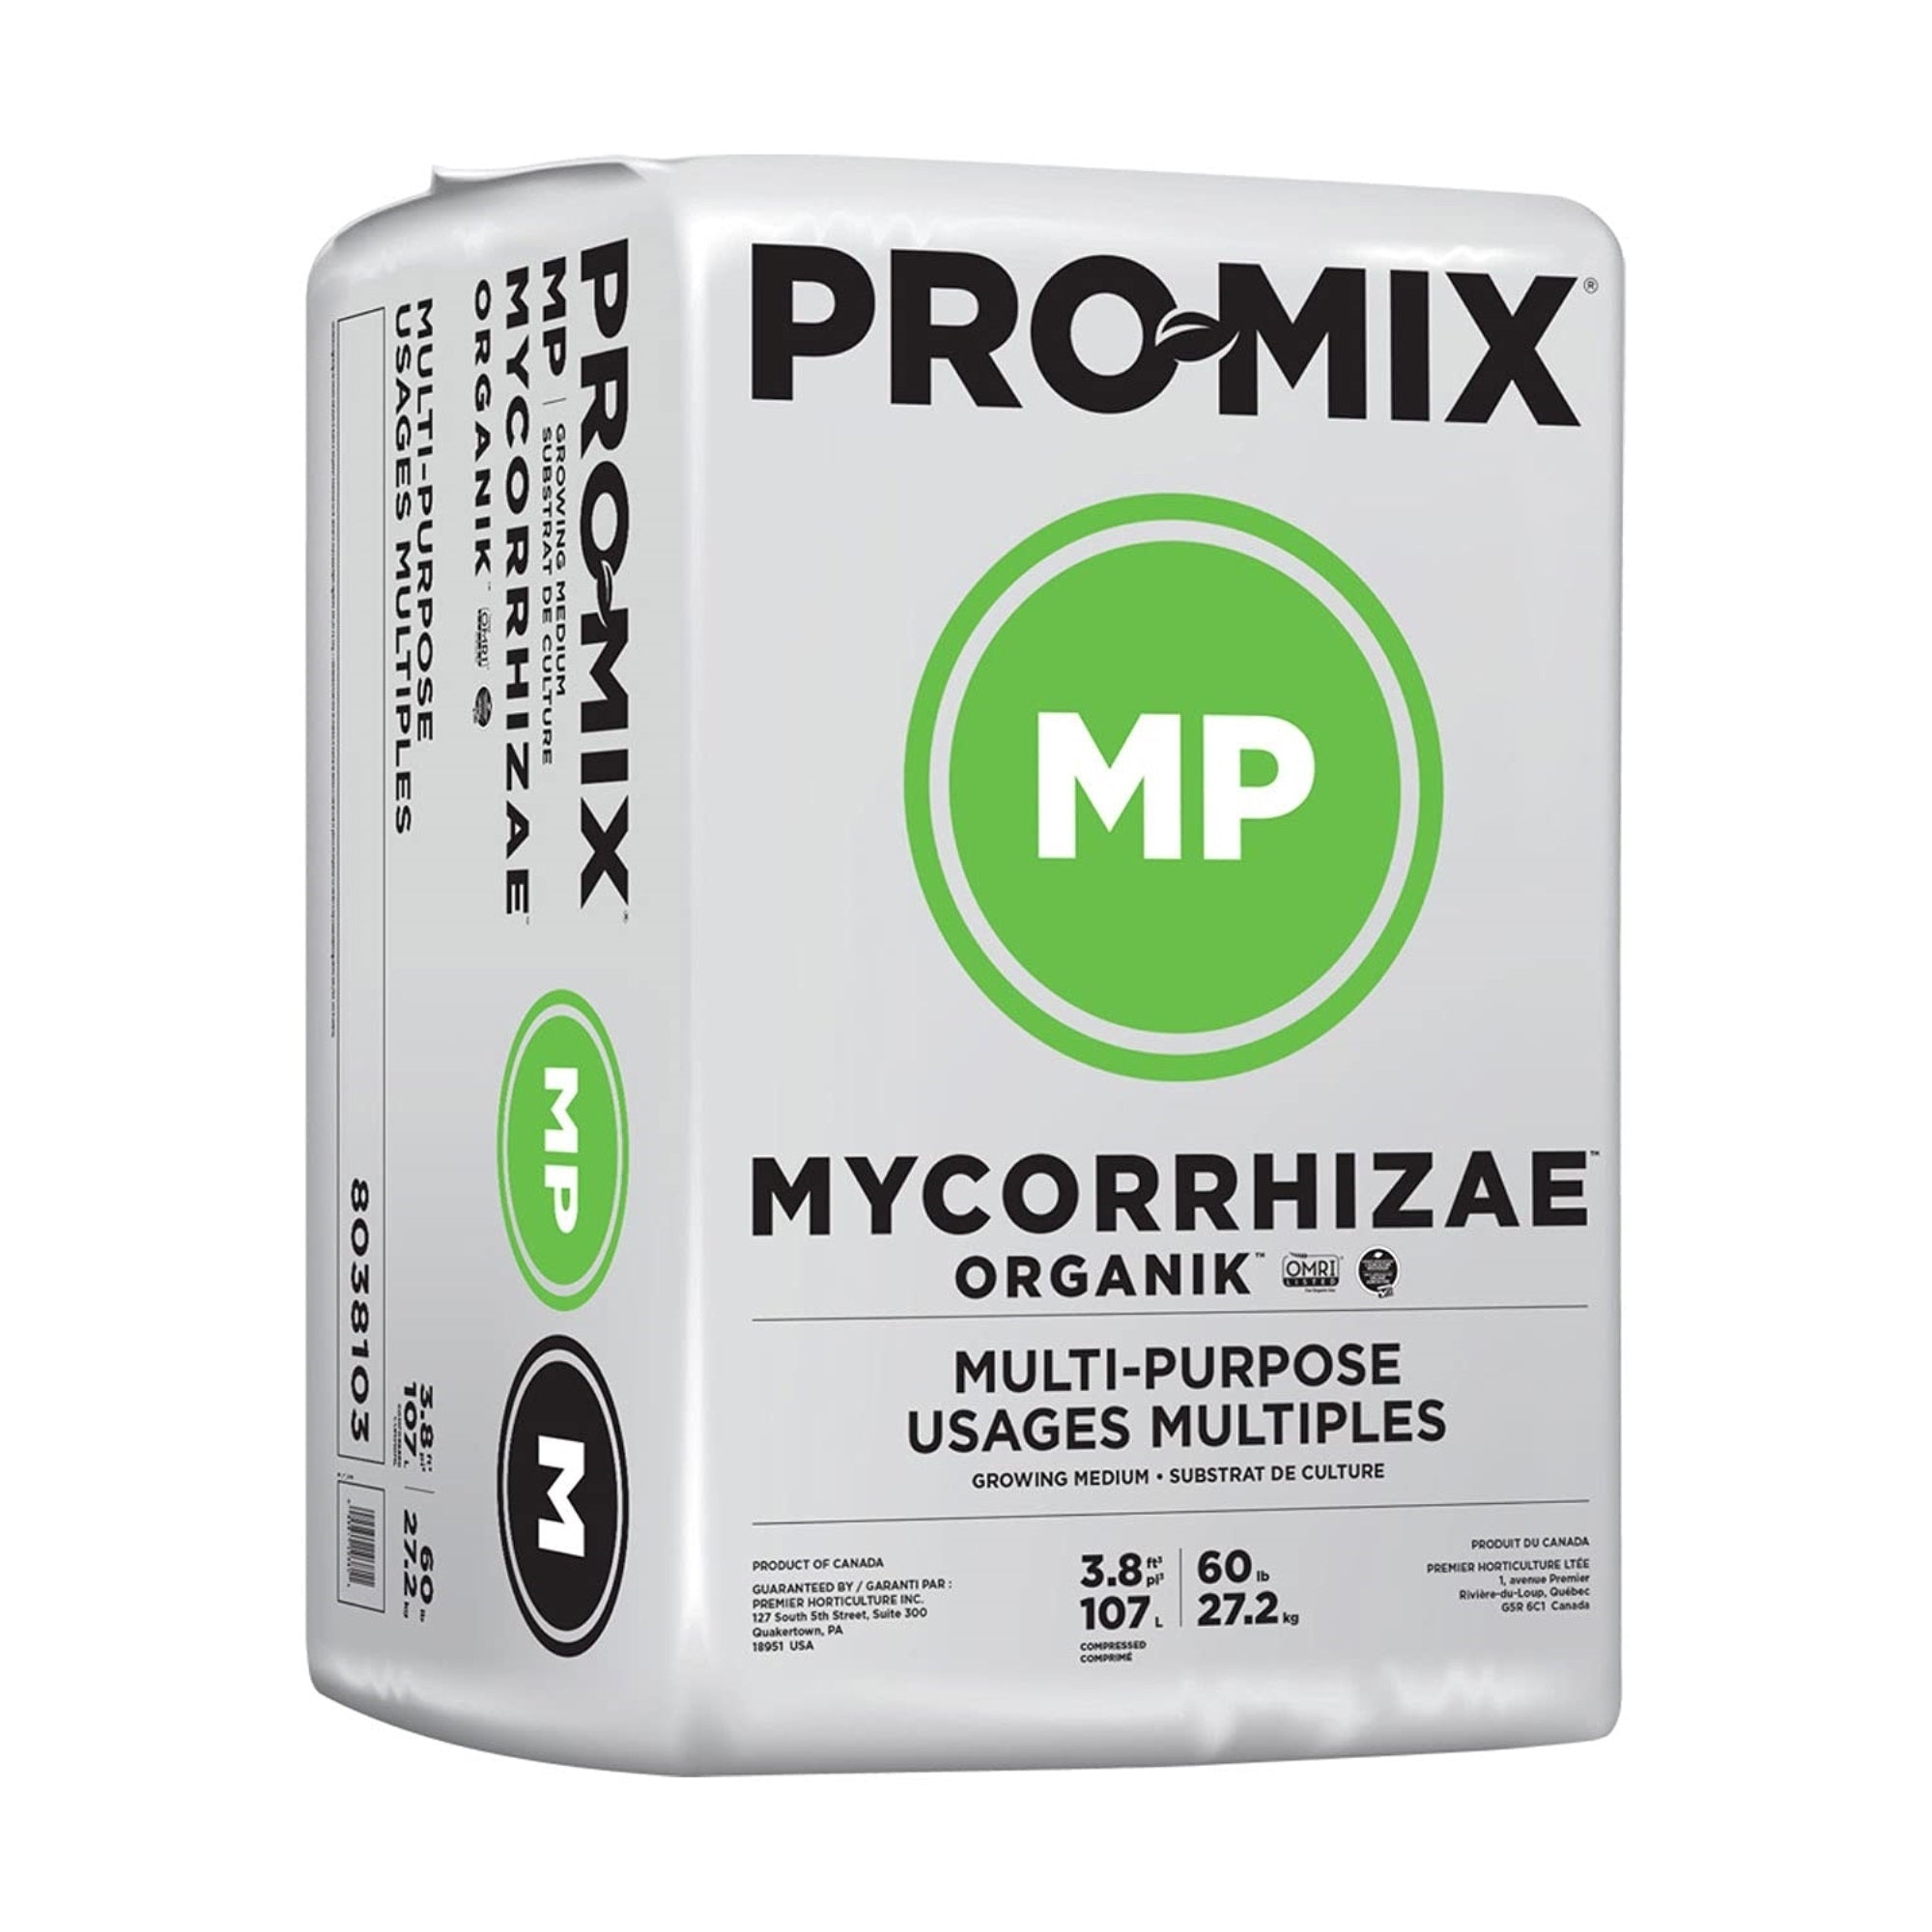 Premeir Horticulture PRO-MIX MP Mycorrhizae Organik, Growing Medium 3.8 CF